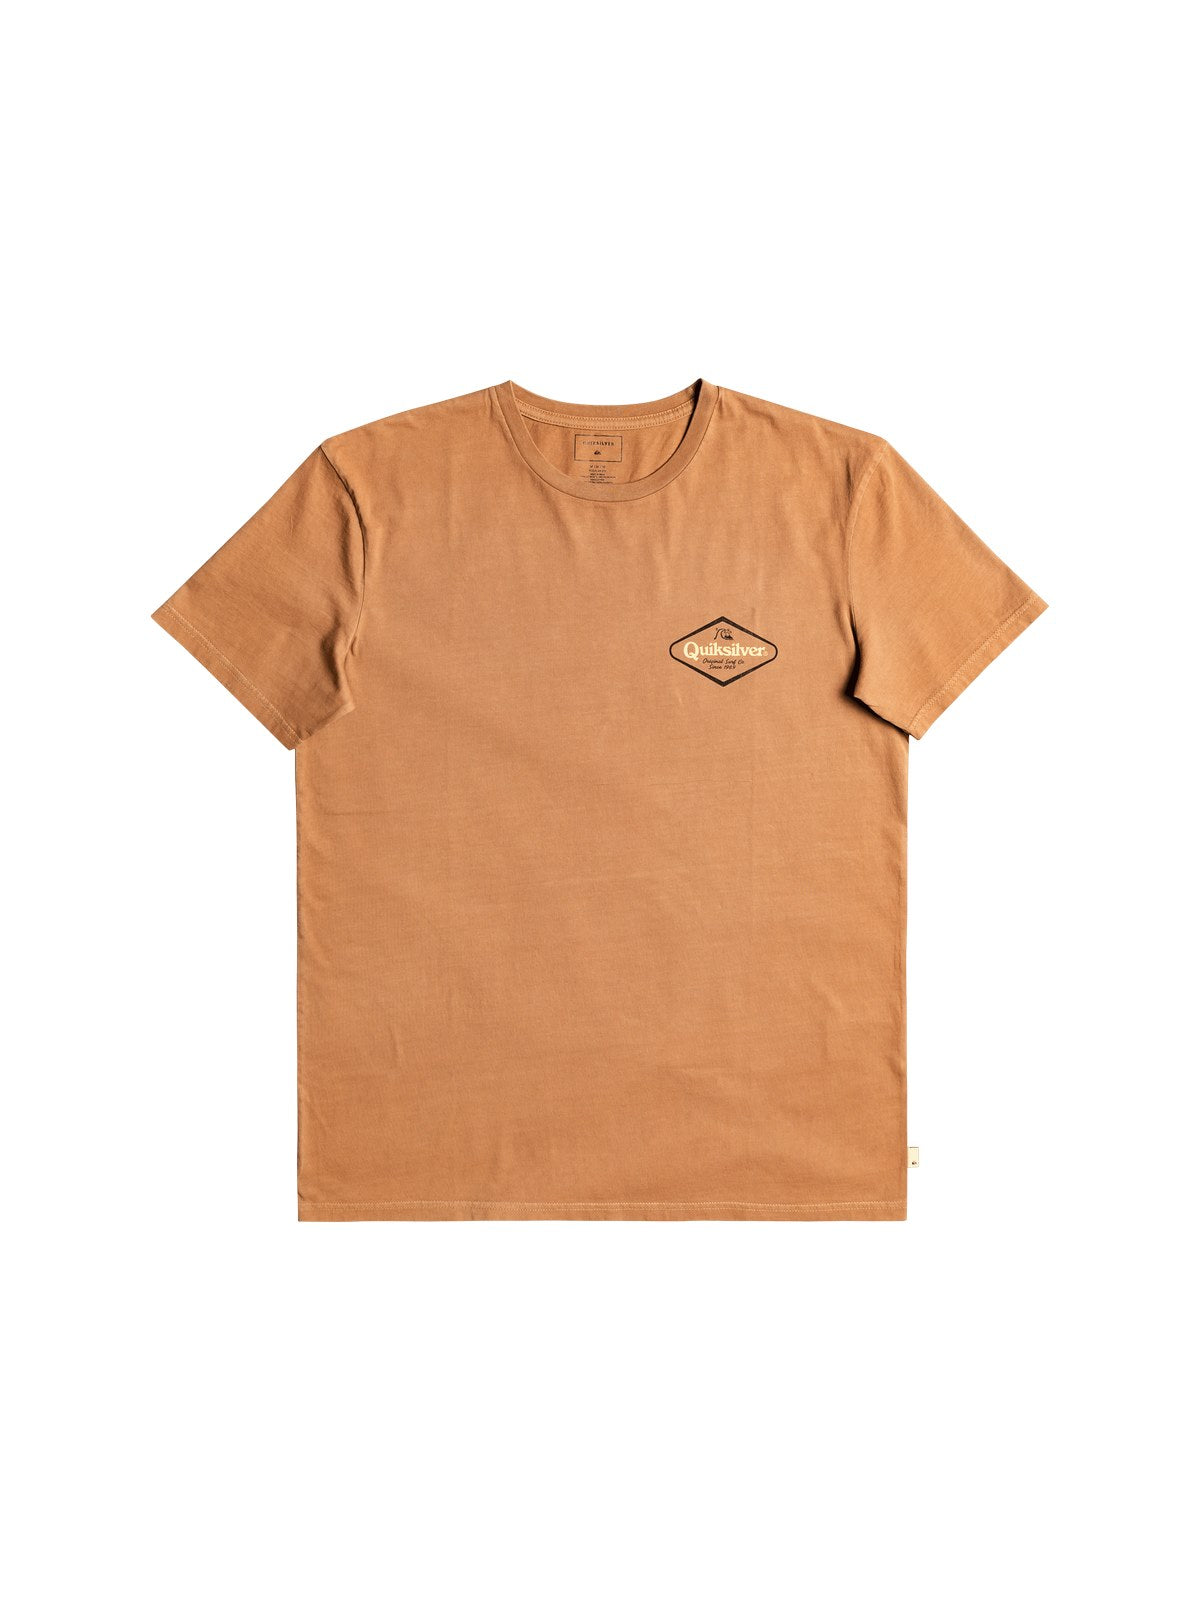 T-Shirt QUIKSILVER Stir It Up M Tees - brązowy